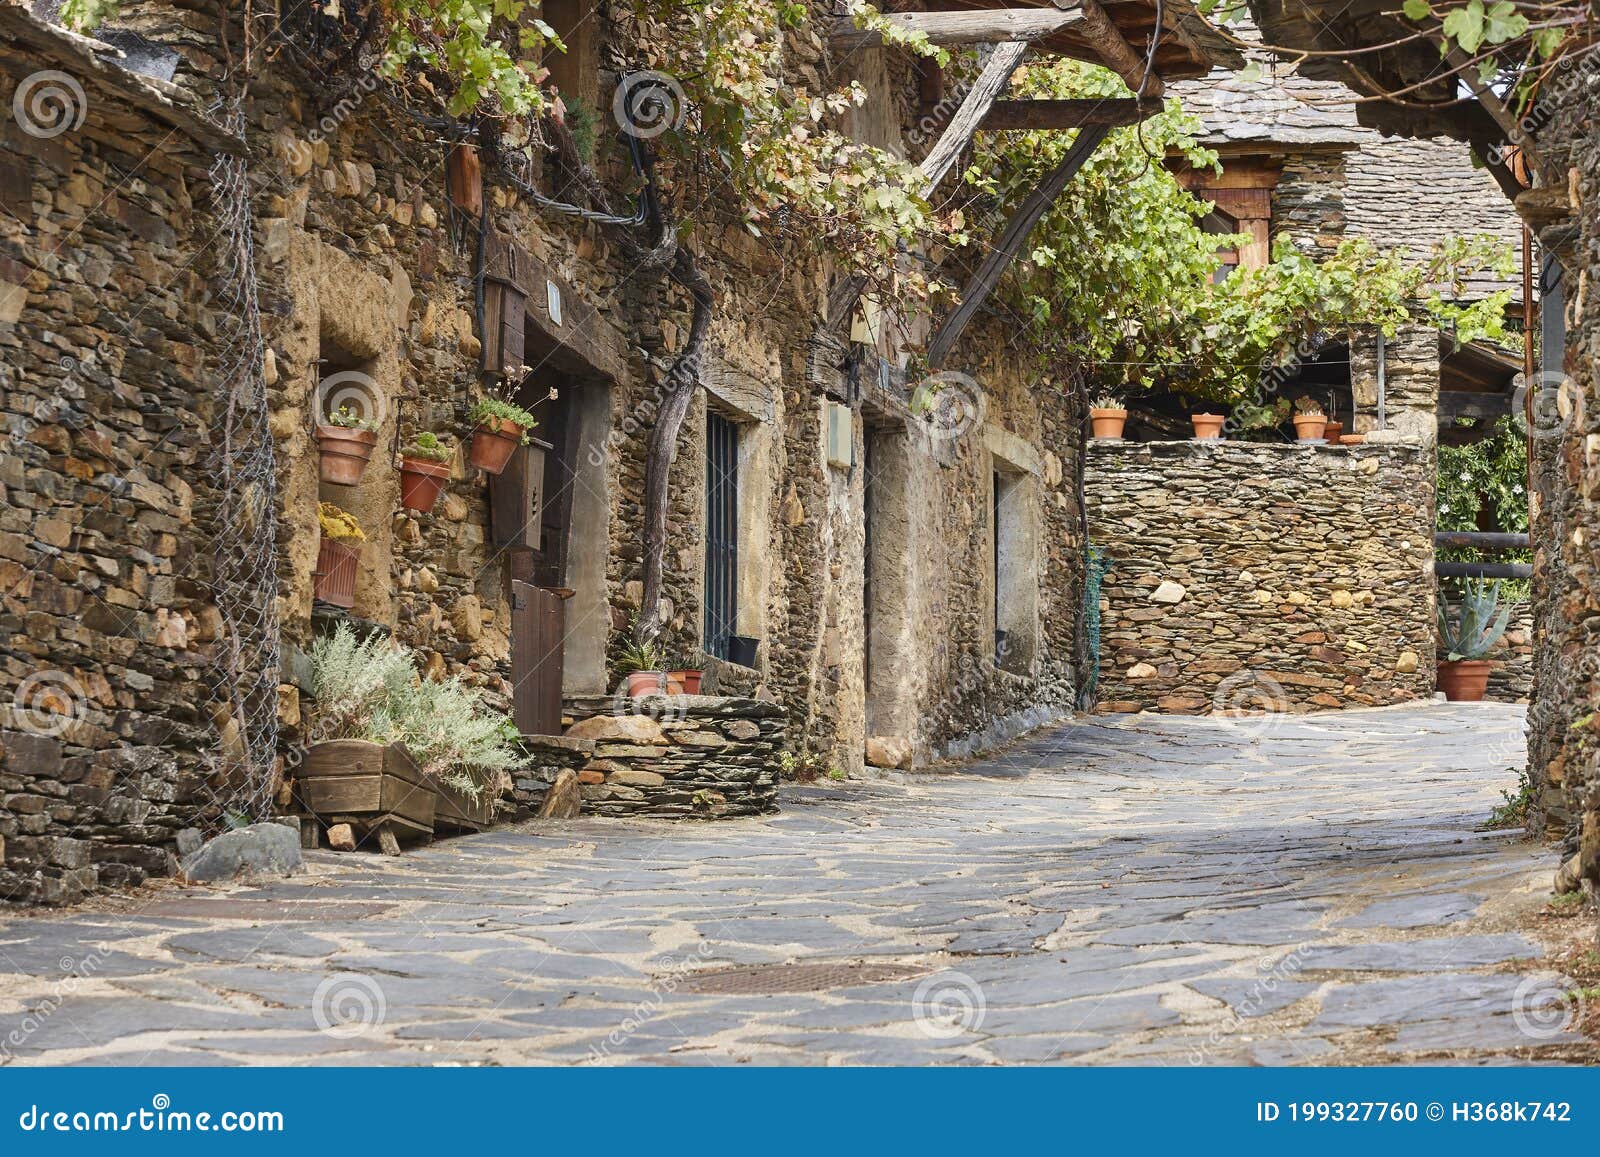 traditional slate stone village roblelacasa. black architecture. guadalajara. spain